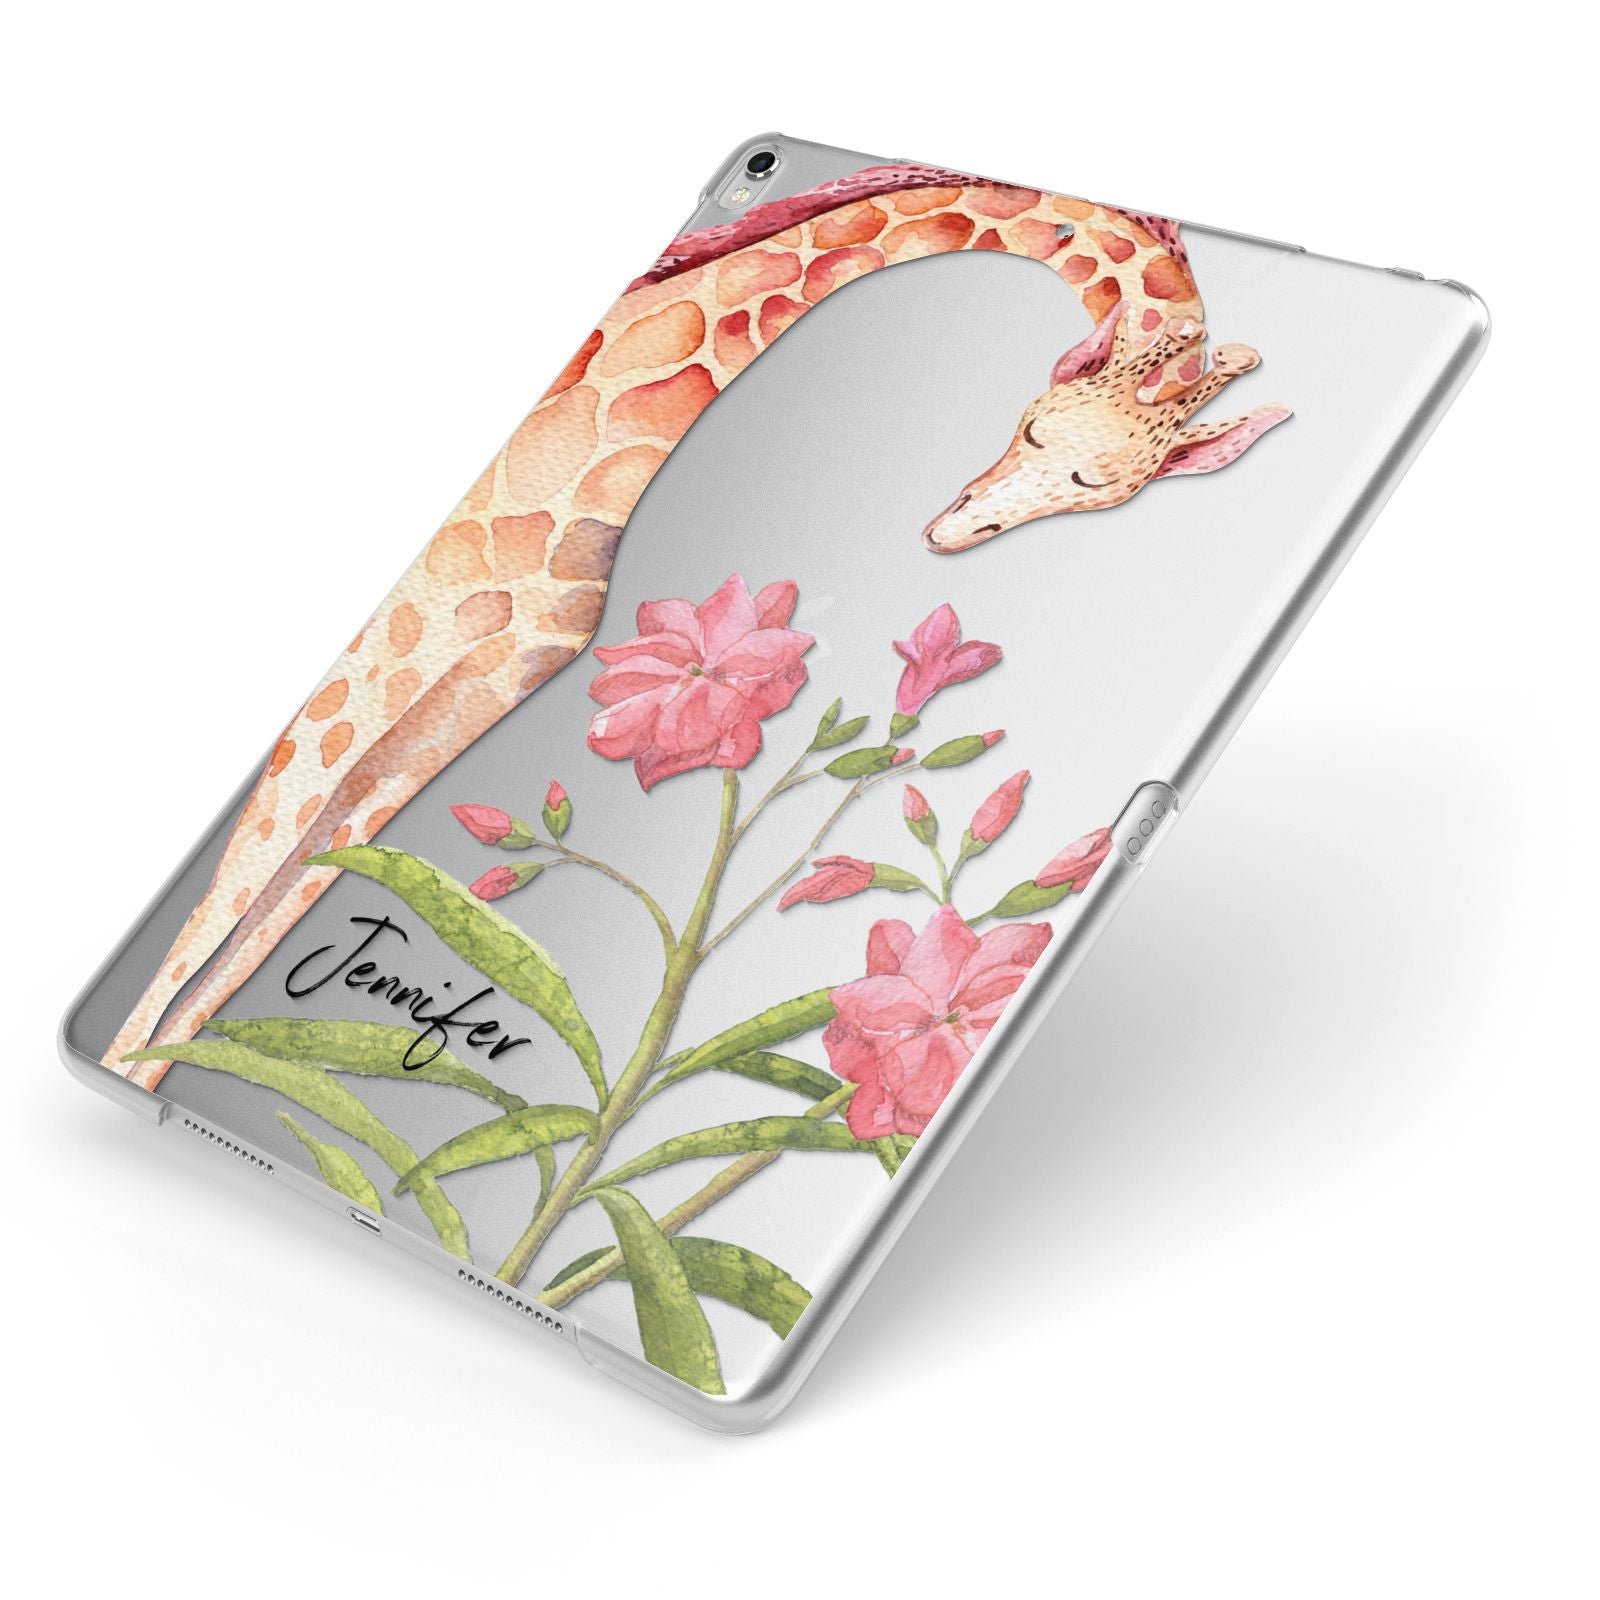 Personalised Giraffe Apple iPad Case on Silver iPad Side View